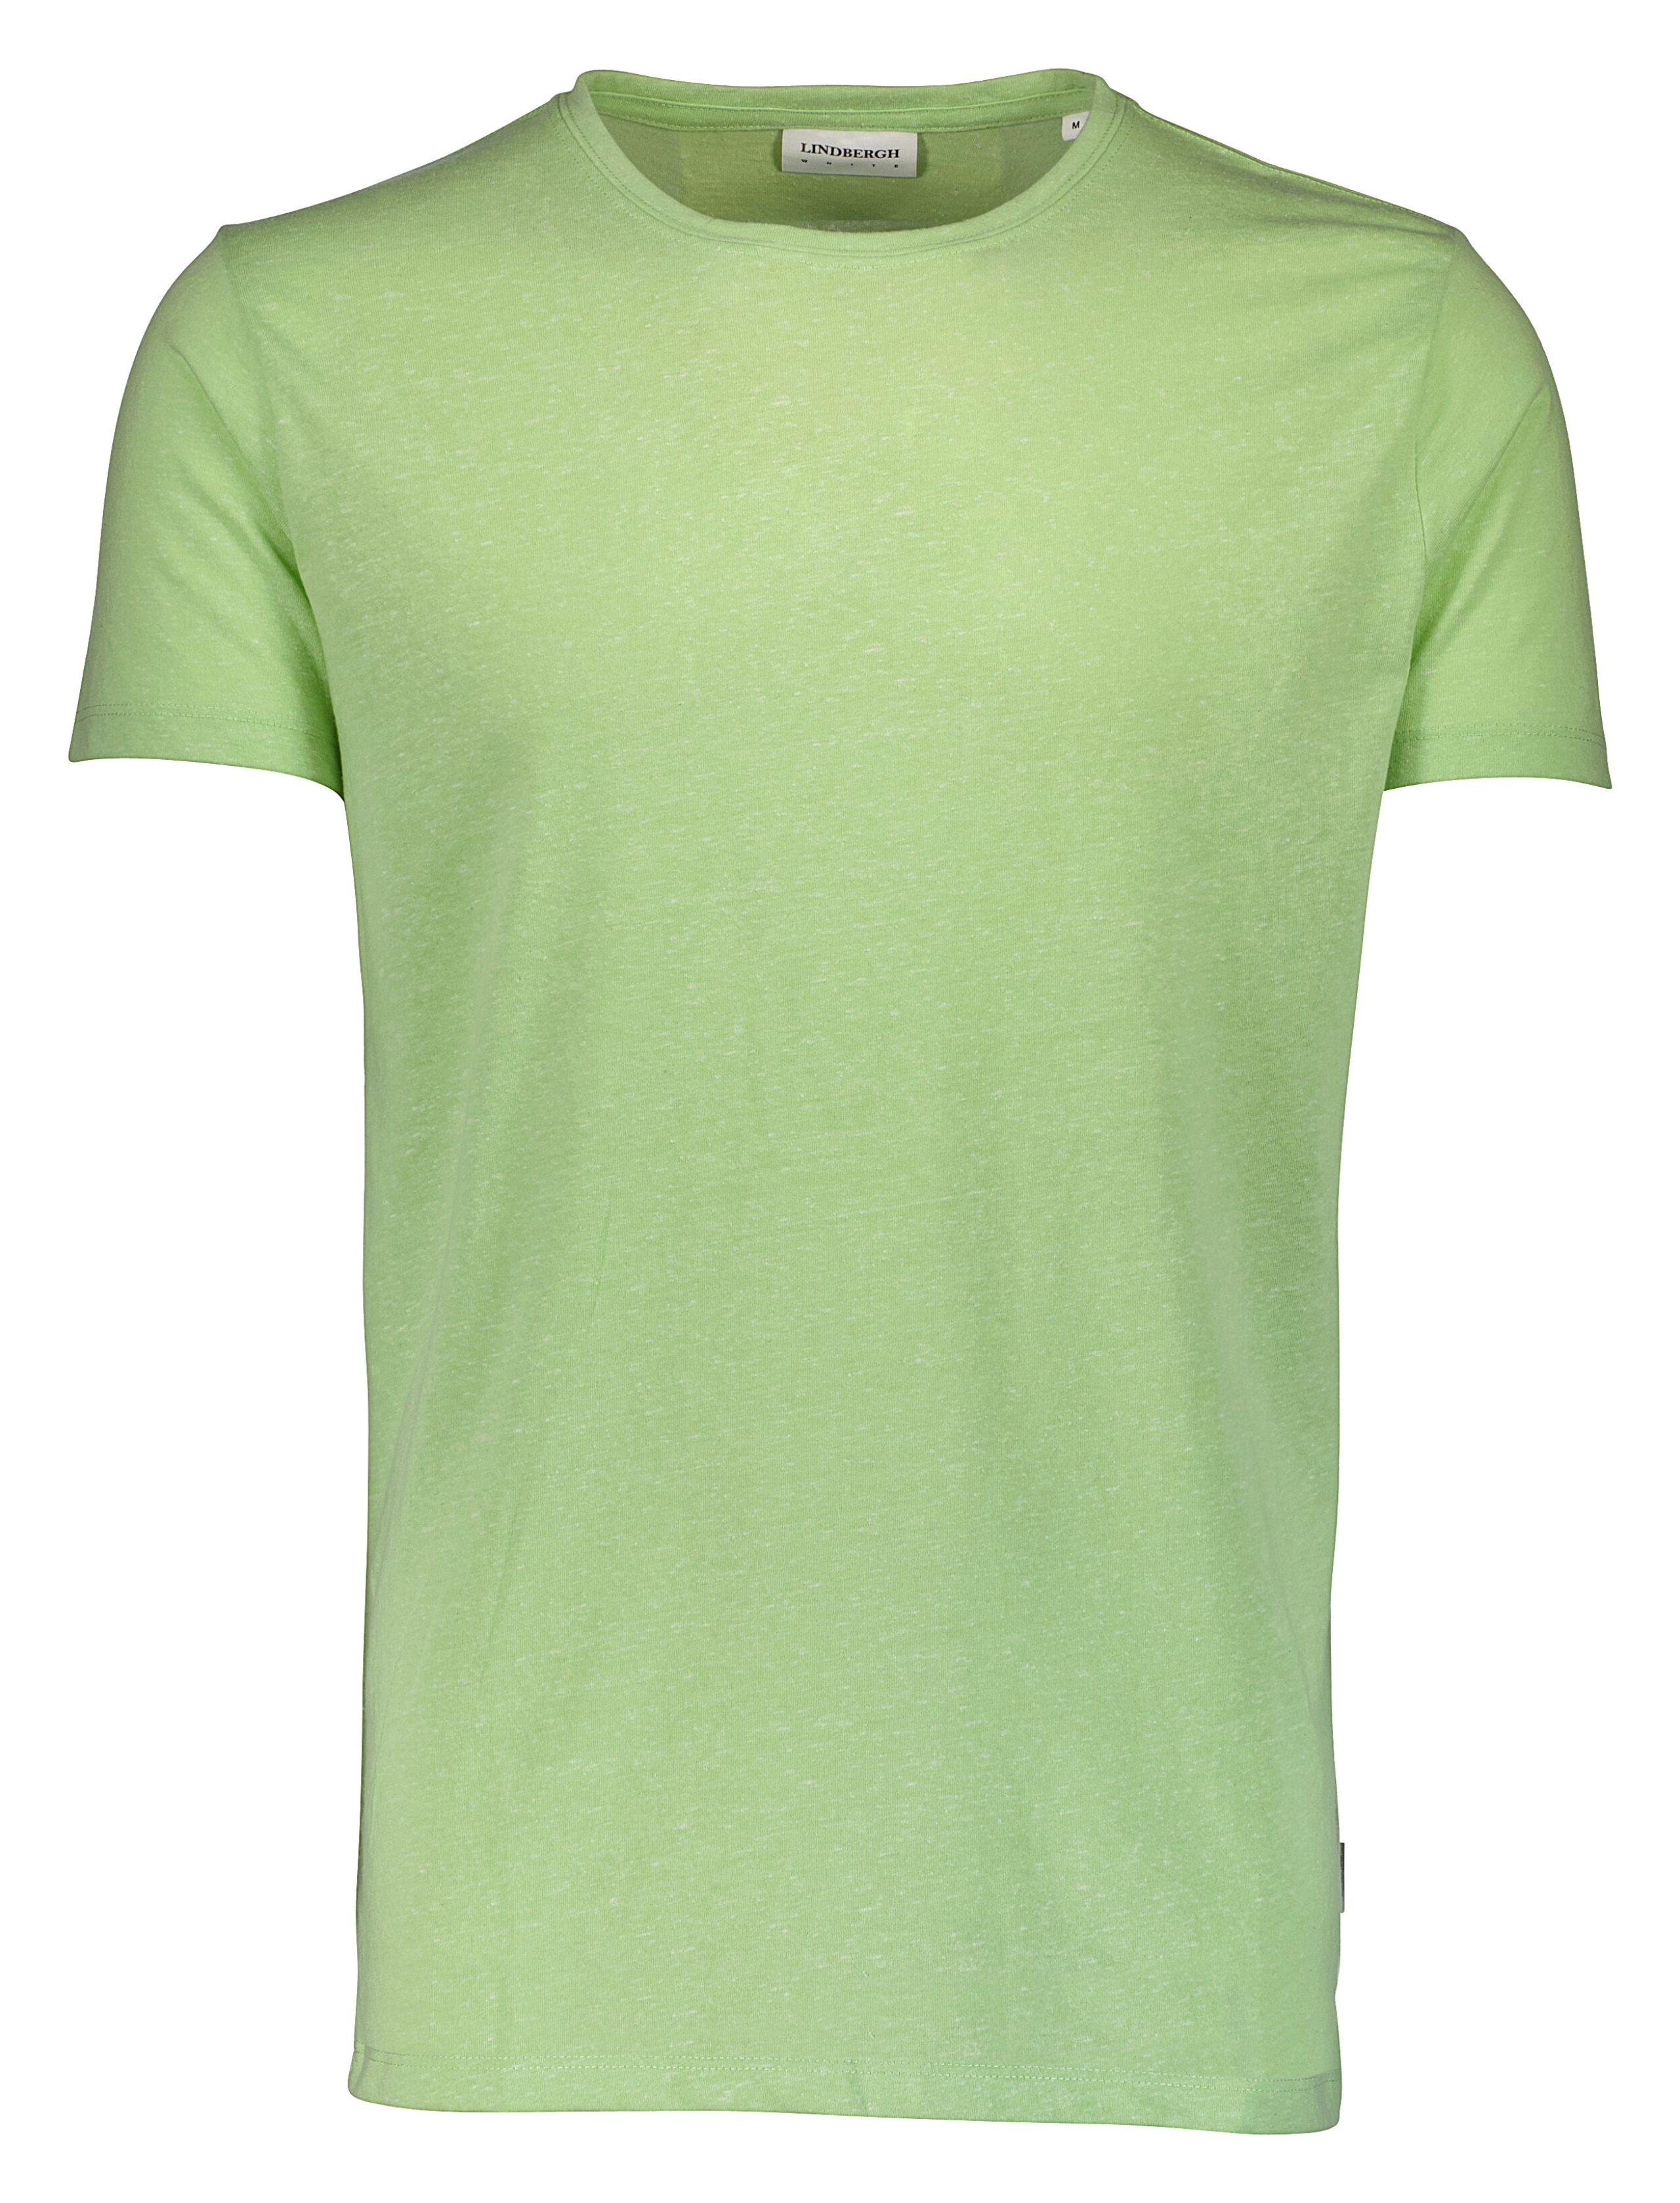 Lindbergh T-shirt grön / lt green